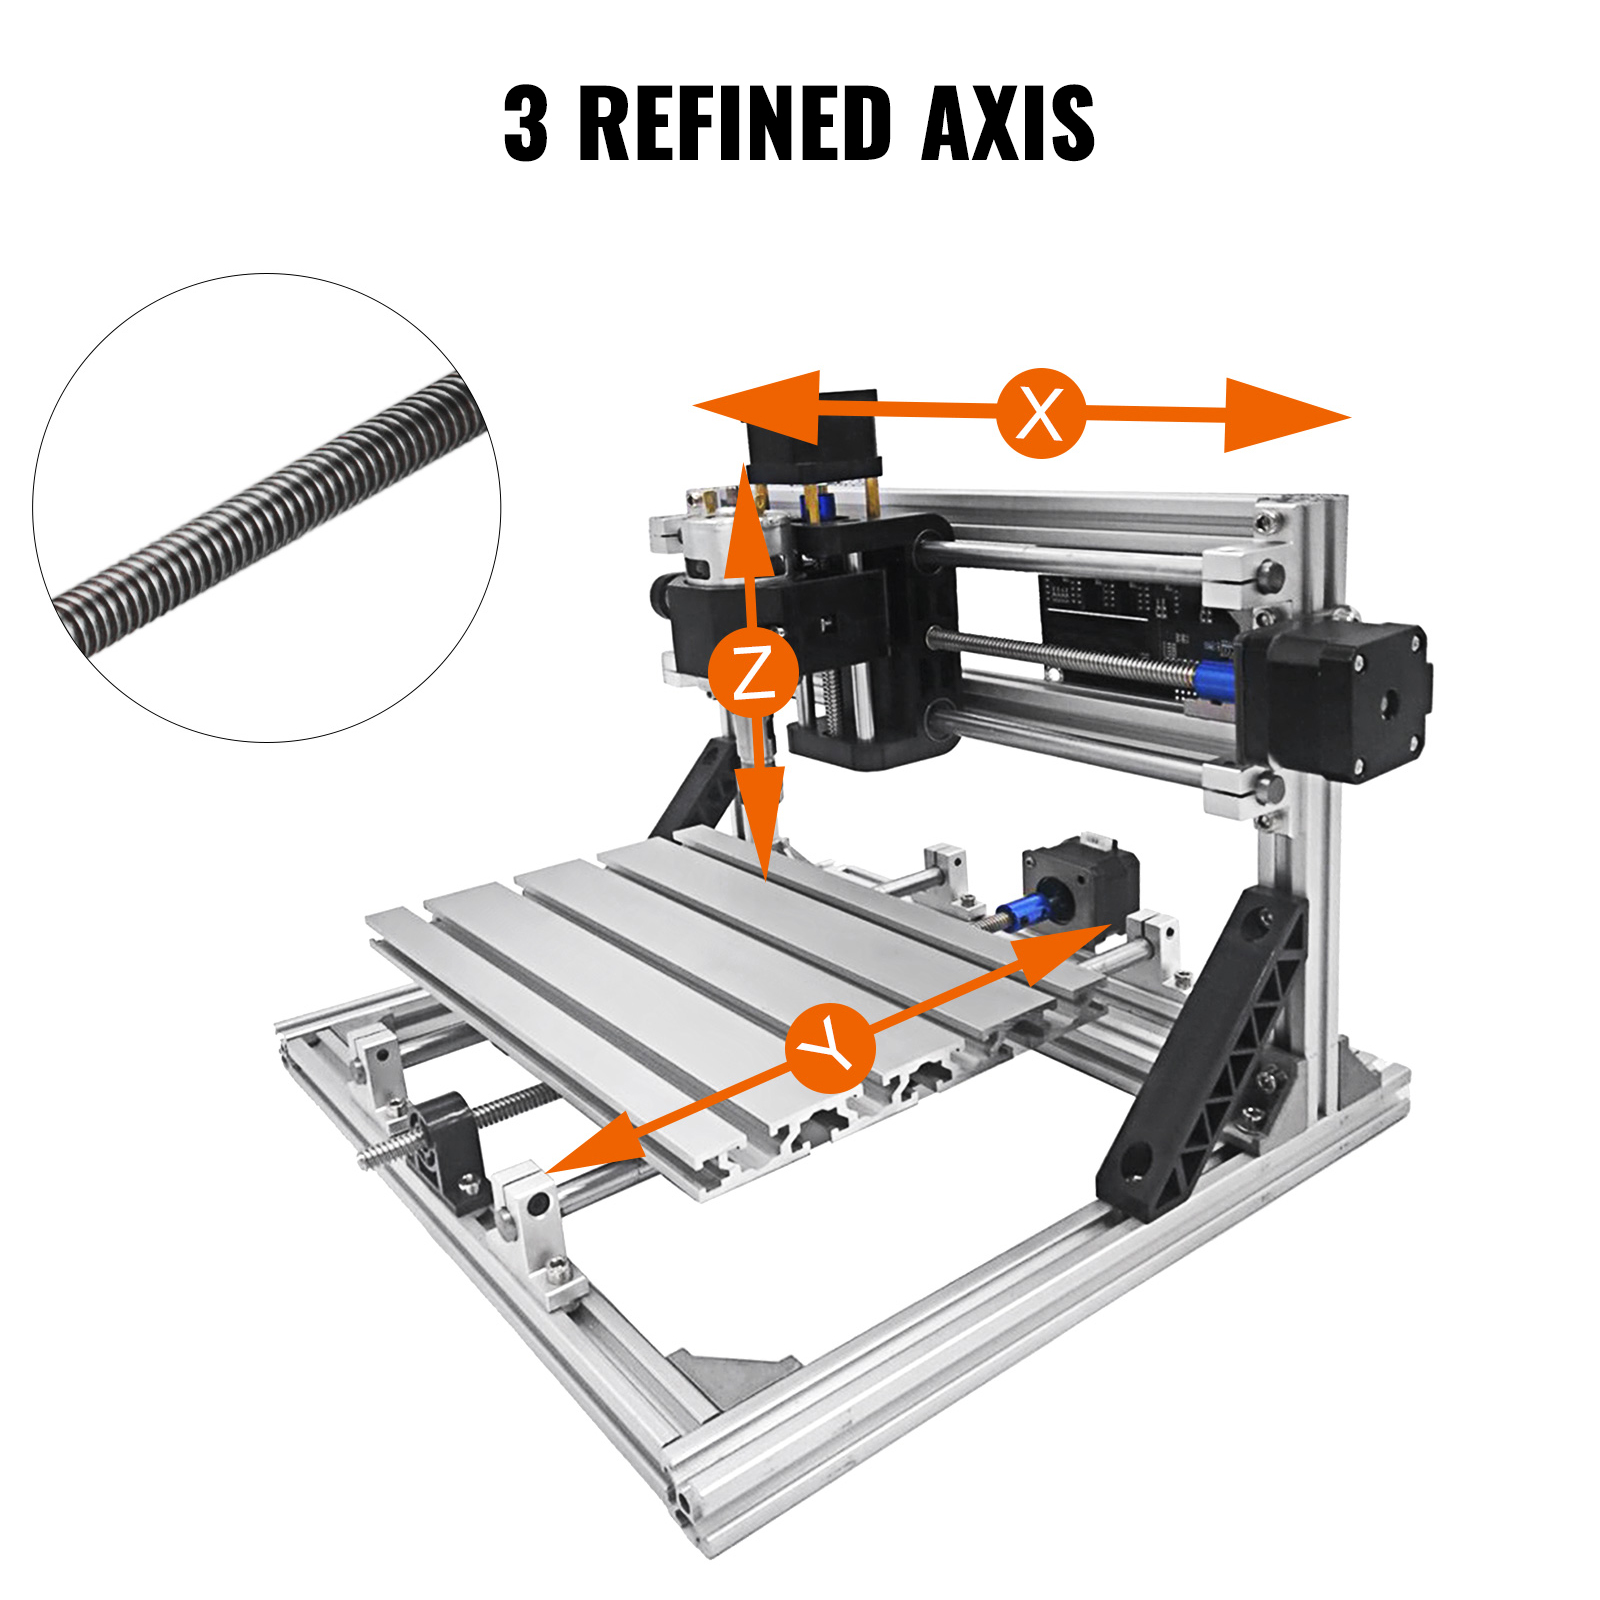 3 Axis CNC Router Kit 2418 5500MW Für Holz Gravieren 2020-Aluminiumprofile 